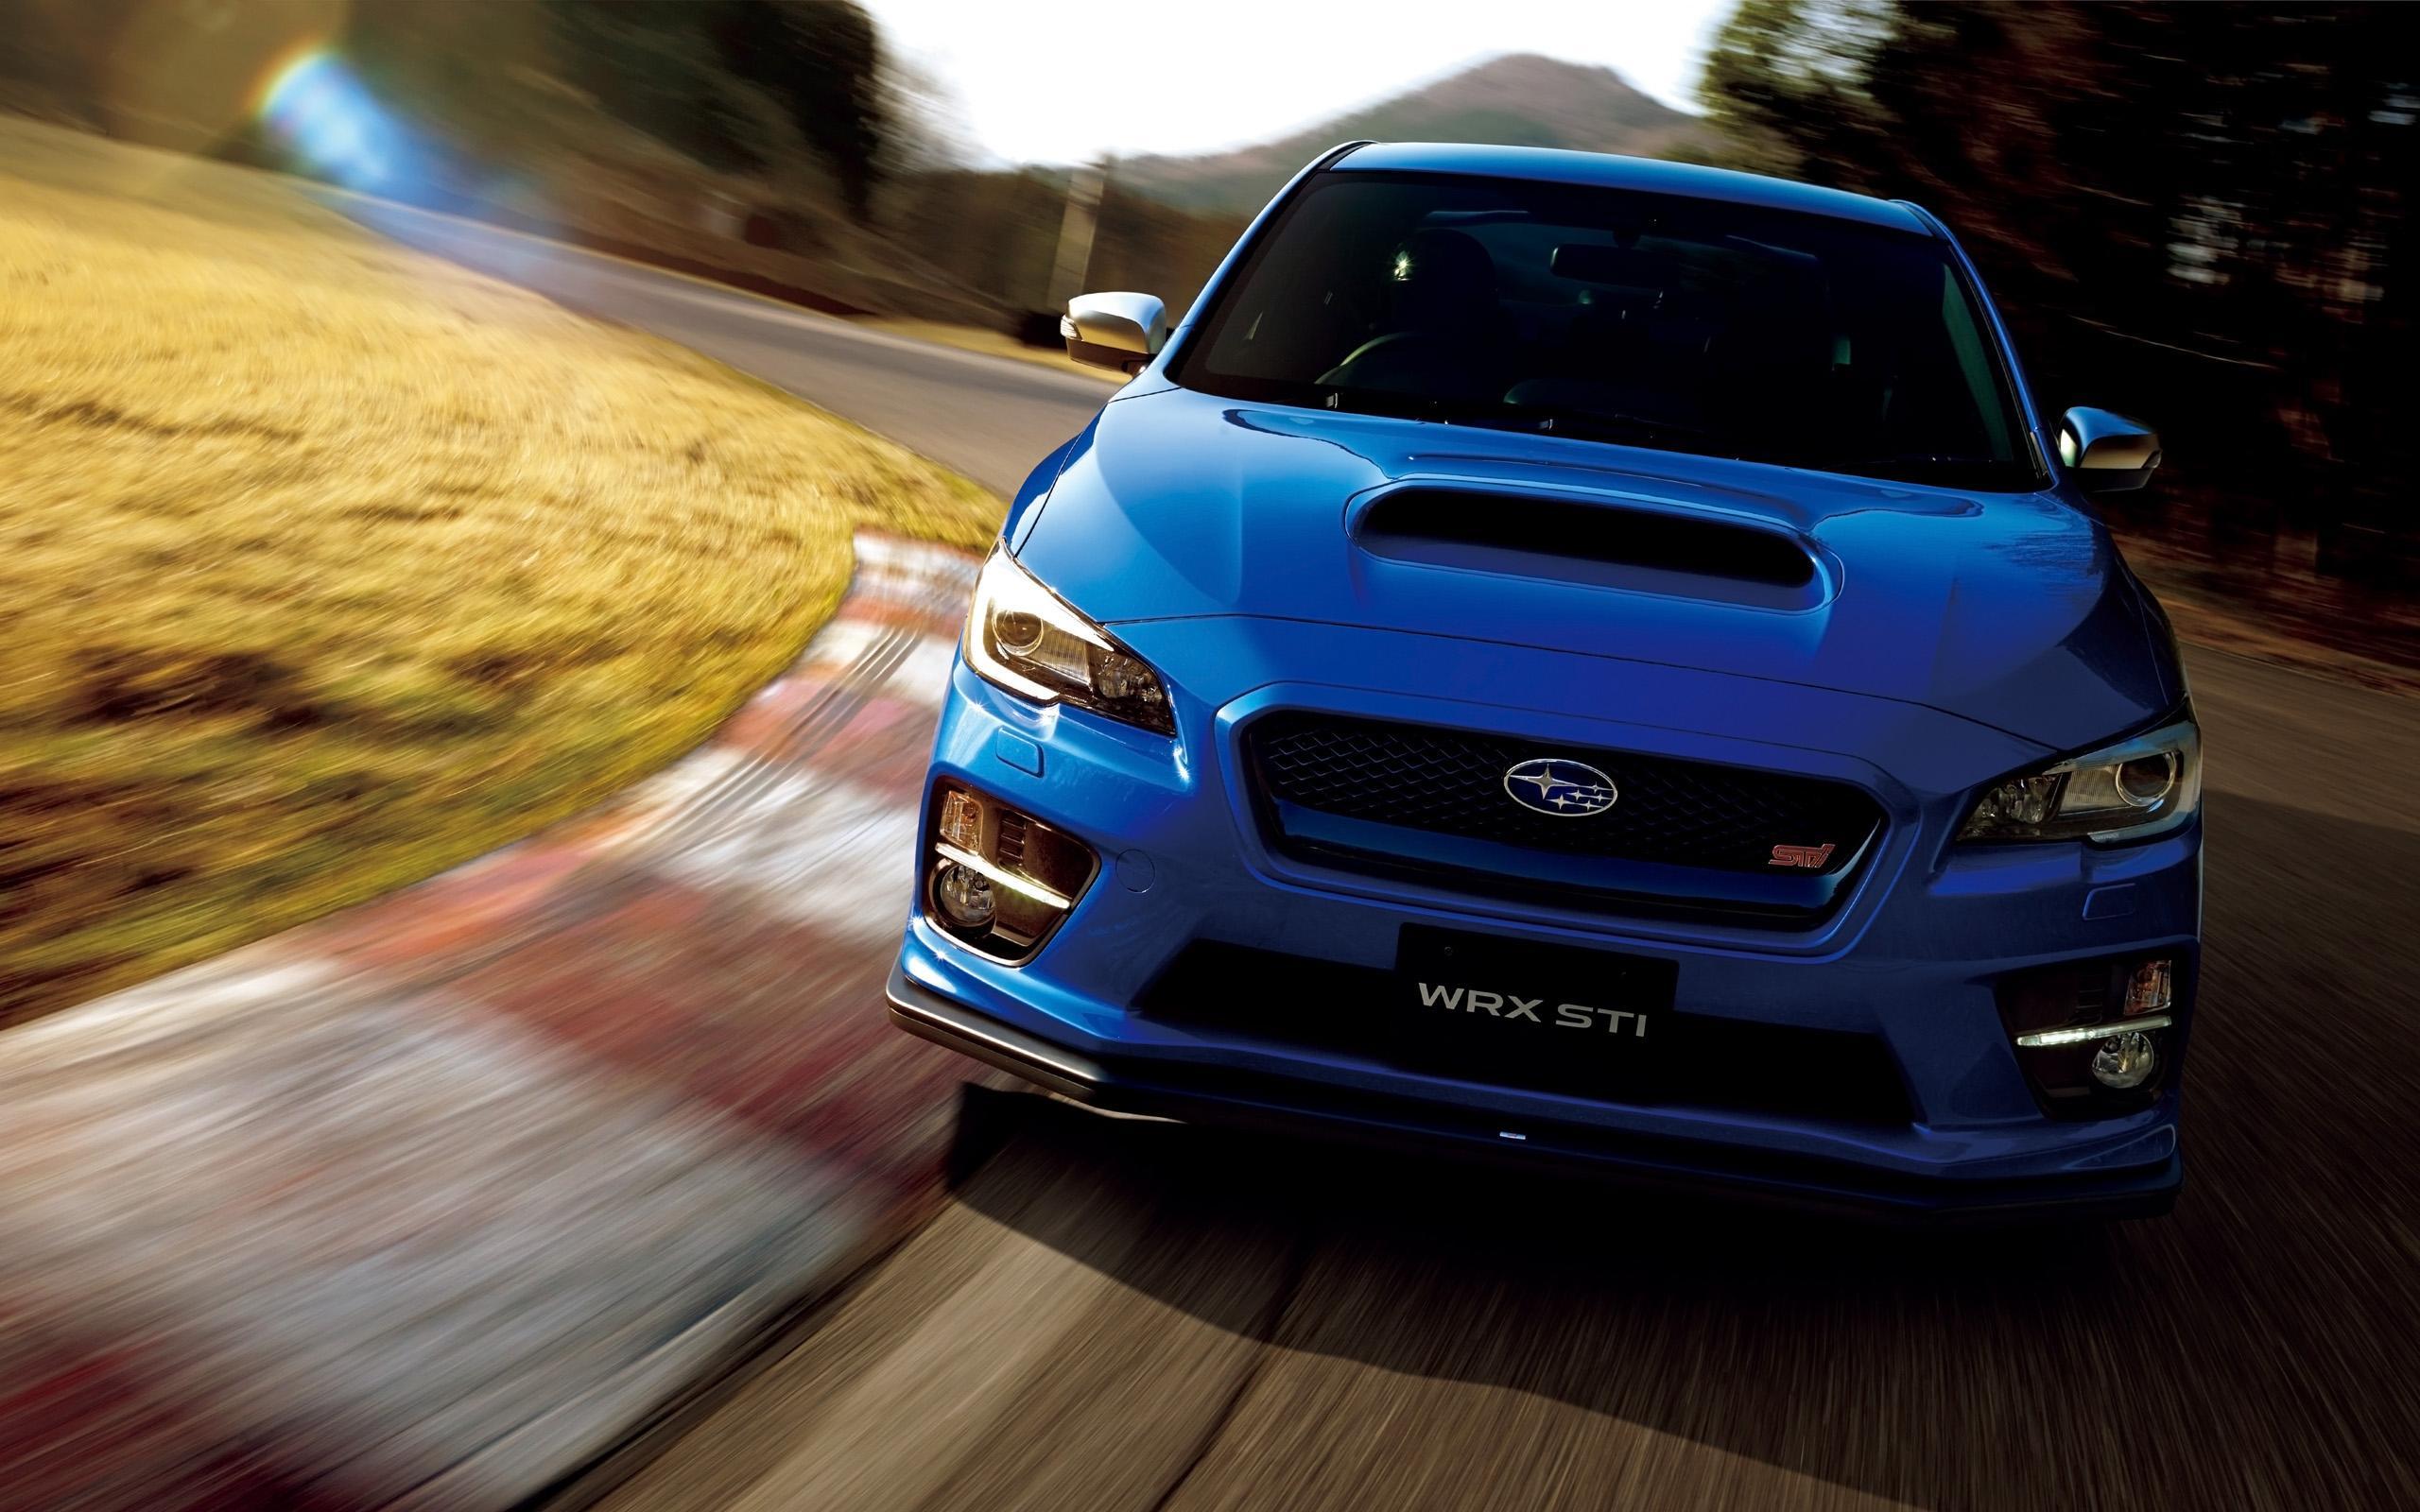 Stunning HD Subaru Wallpaper image For Free Download